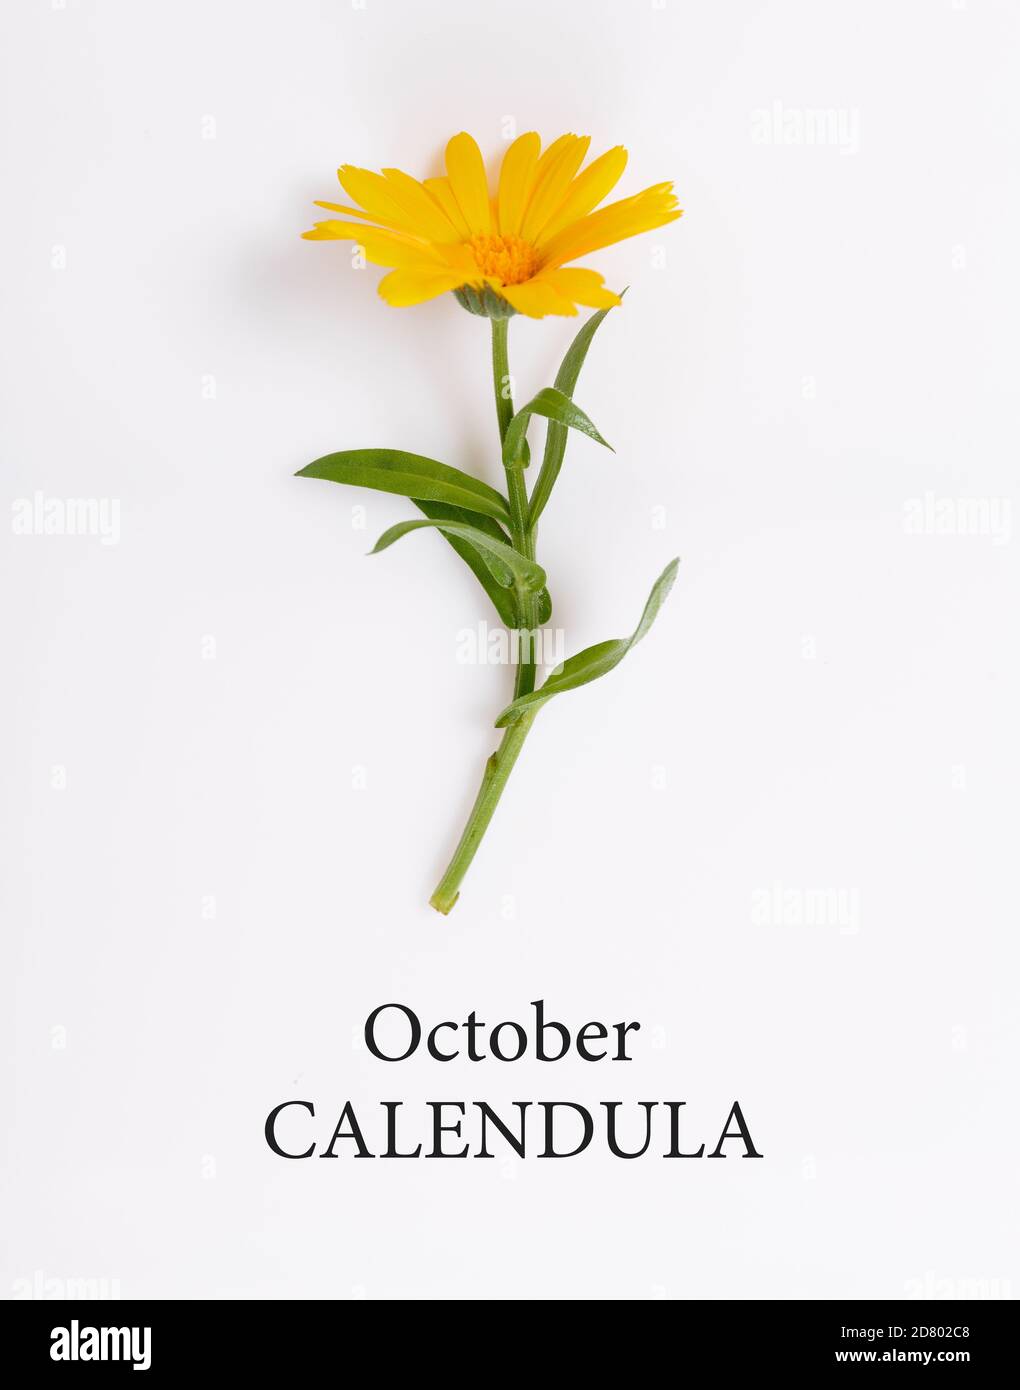 Calendula, Oktober Geburt Blume. Geburt Monat Ringelblume Blume Foto. Geburtstagsblume Cliparts Stockfoto